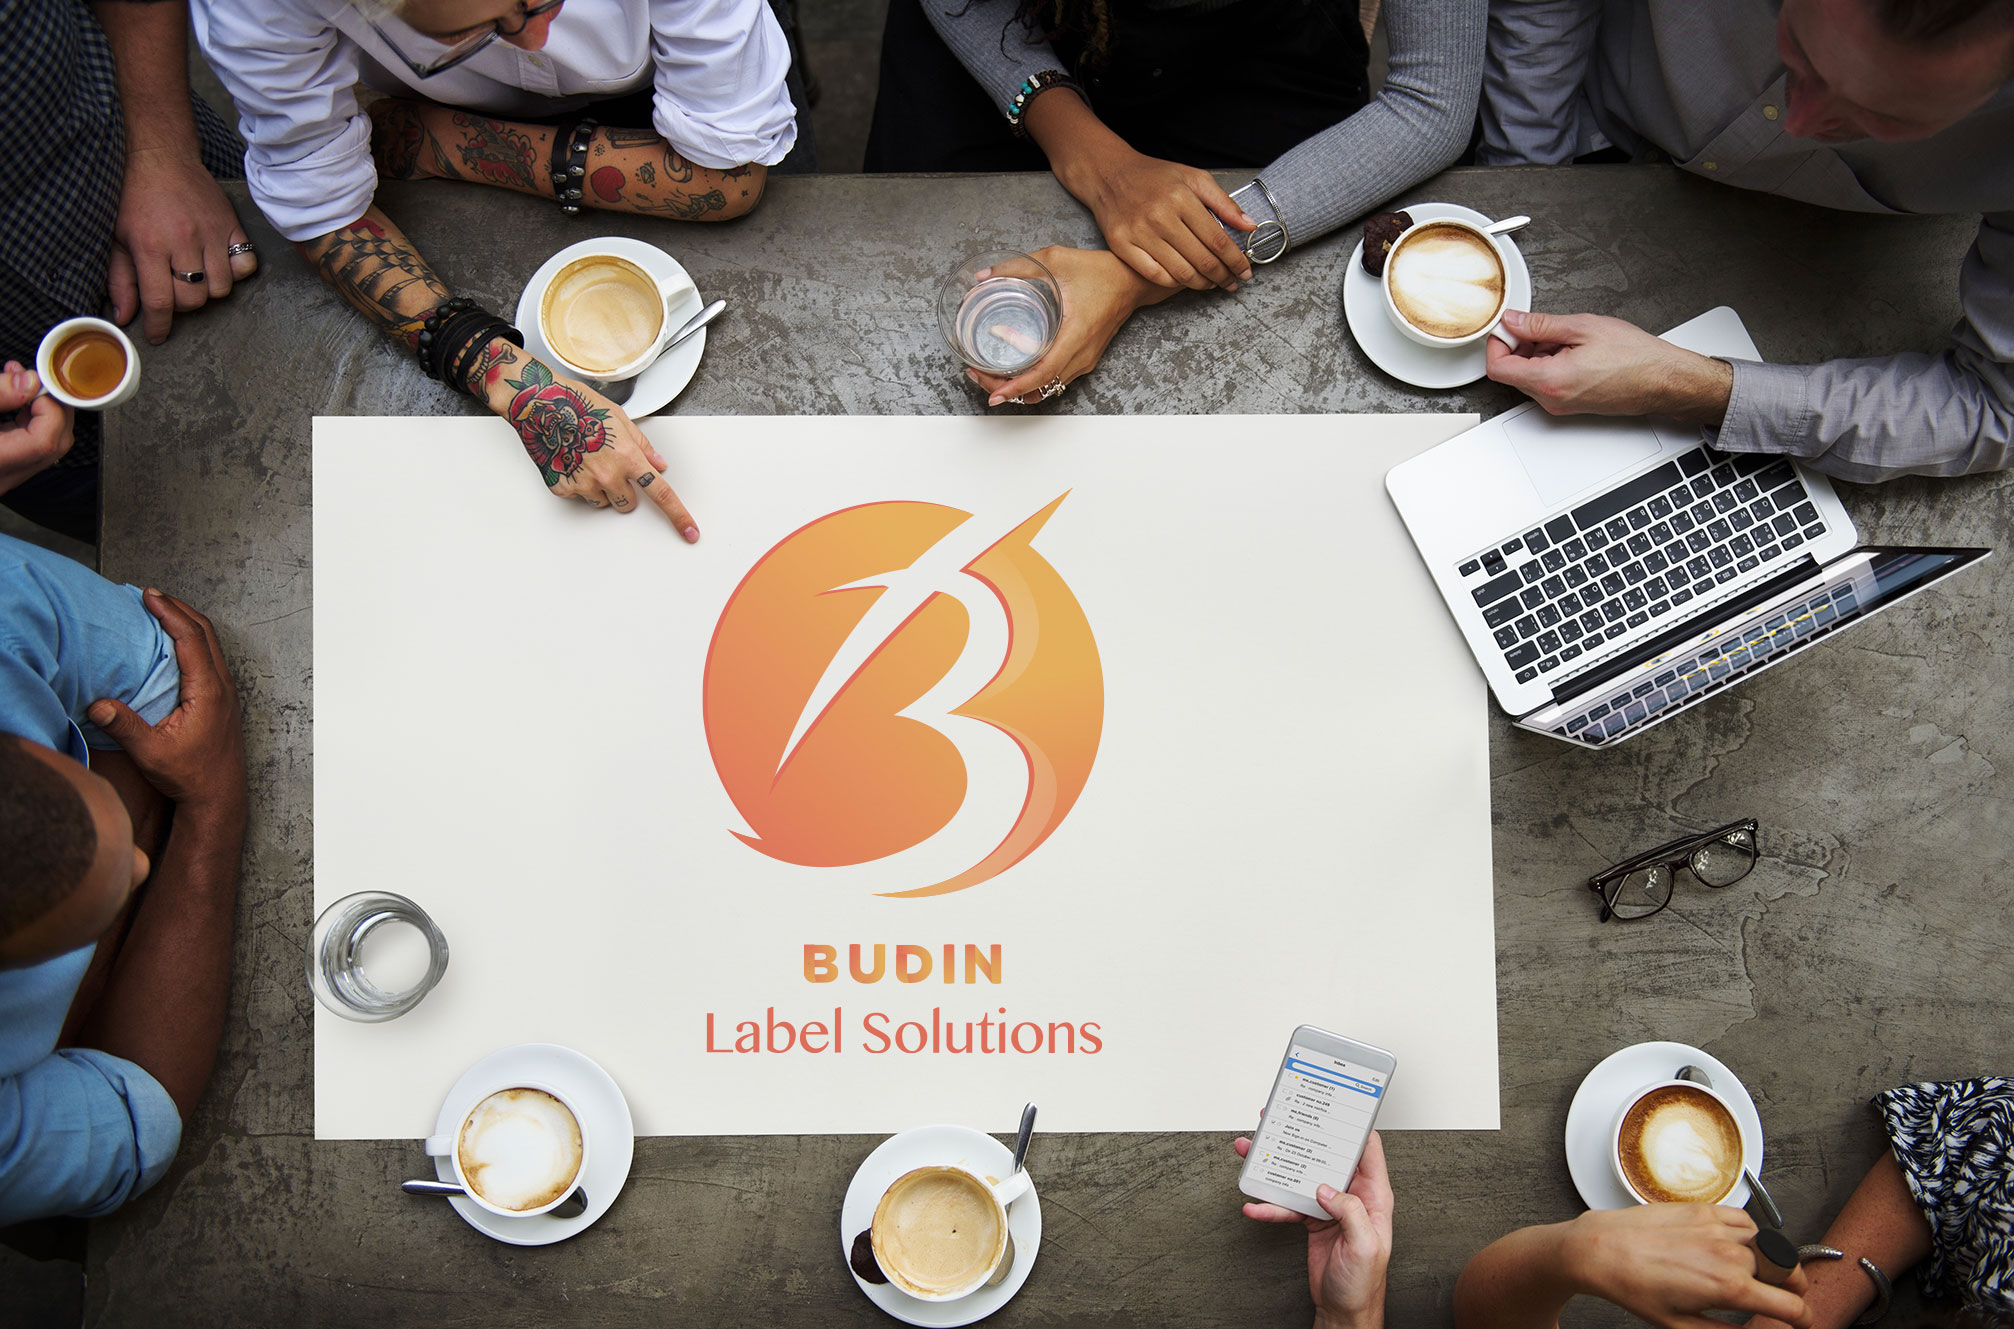 Budin label solutions